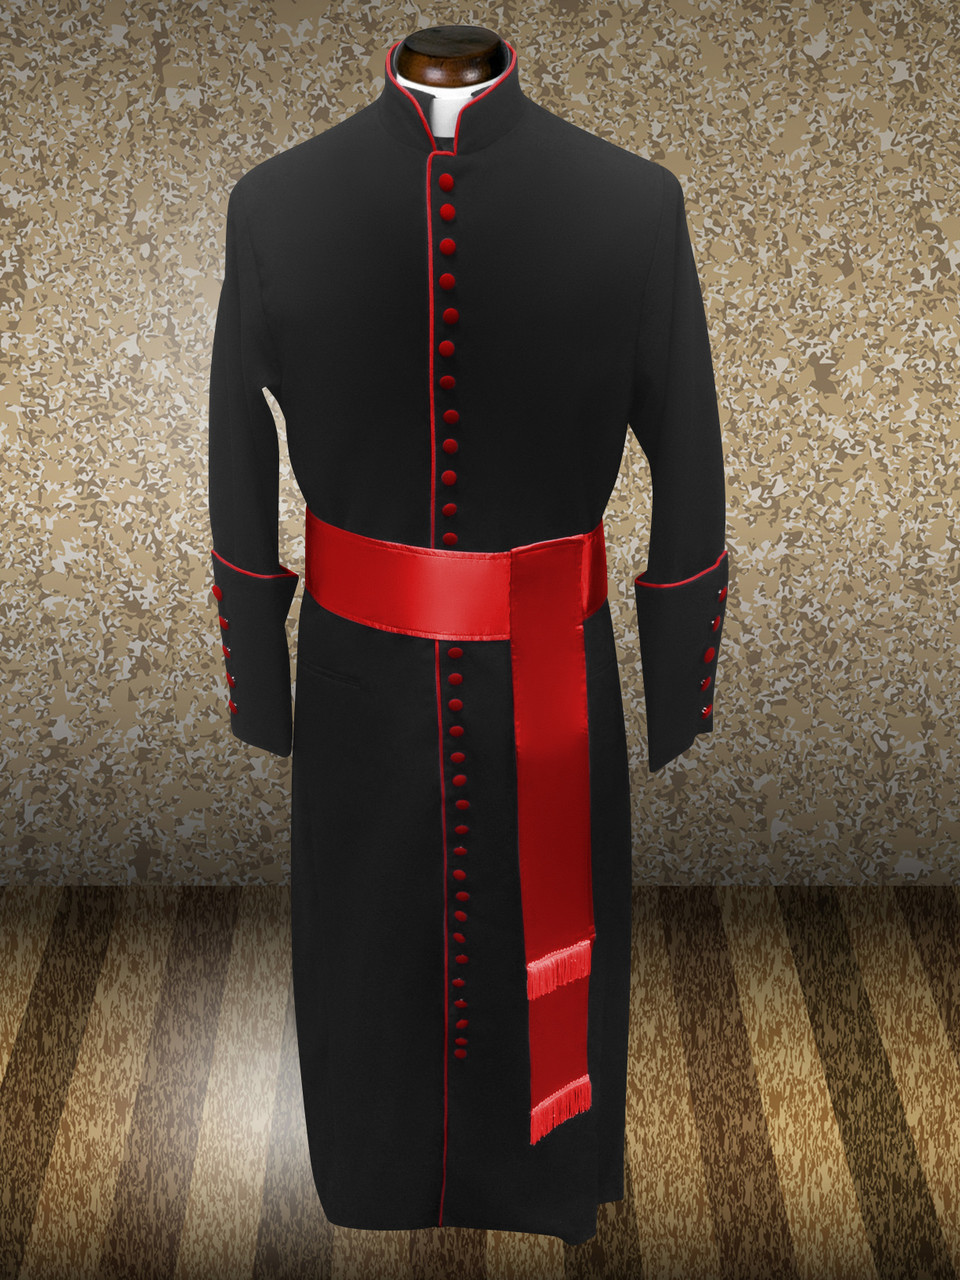 Roman Clergy Cassock Robe in Black & Red